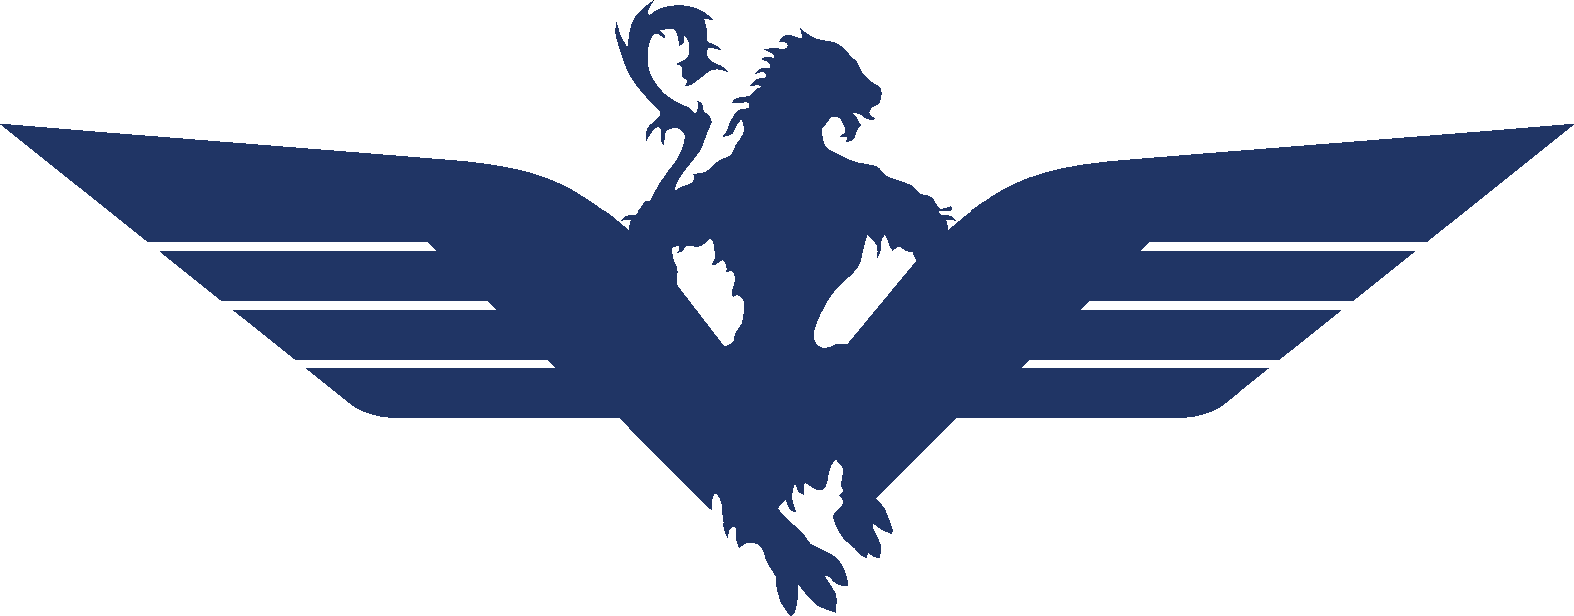 Wings Over Scotland logo